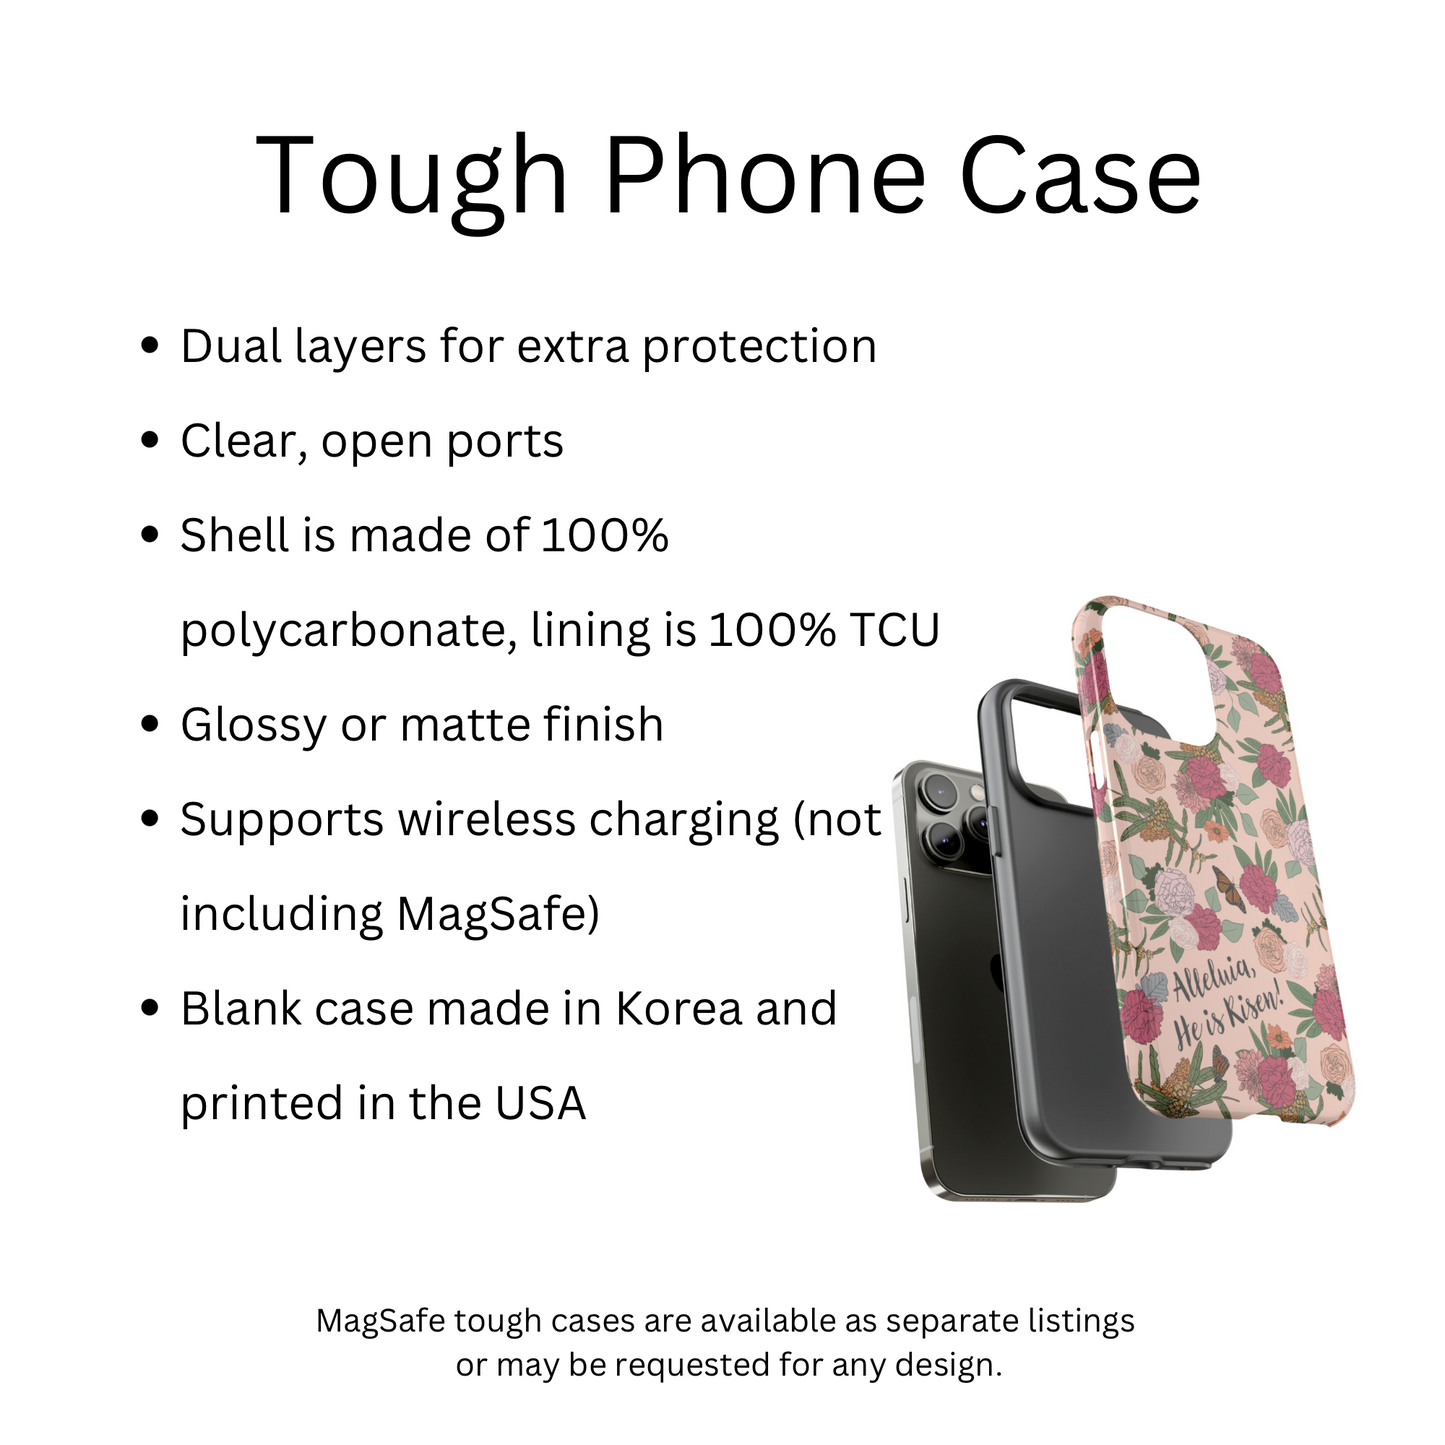 Alleluia “Tough” Phone Case